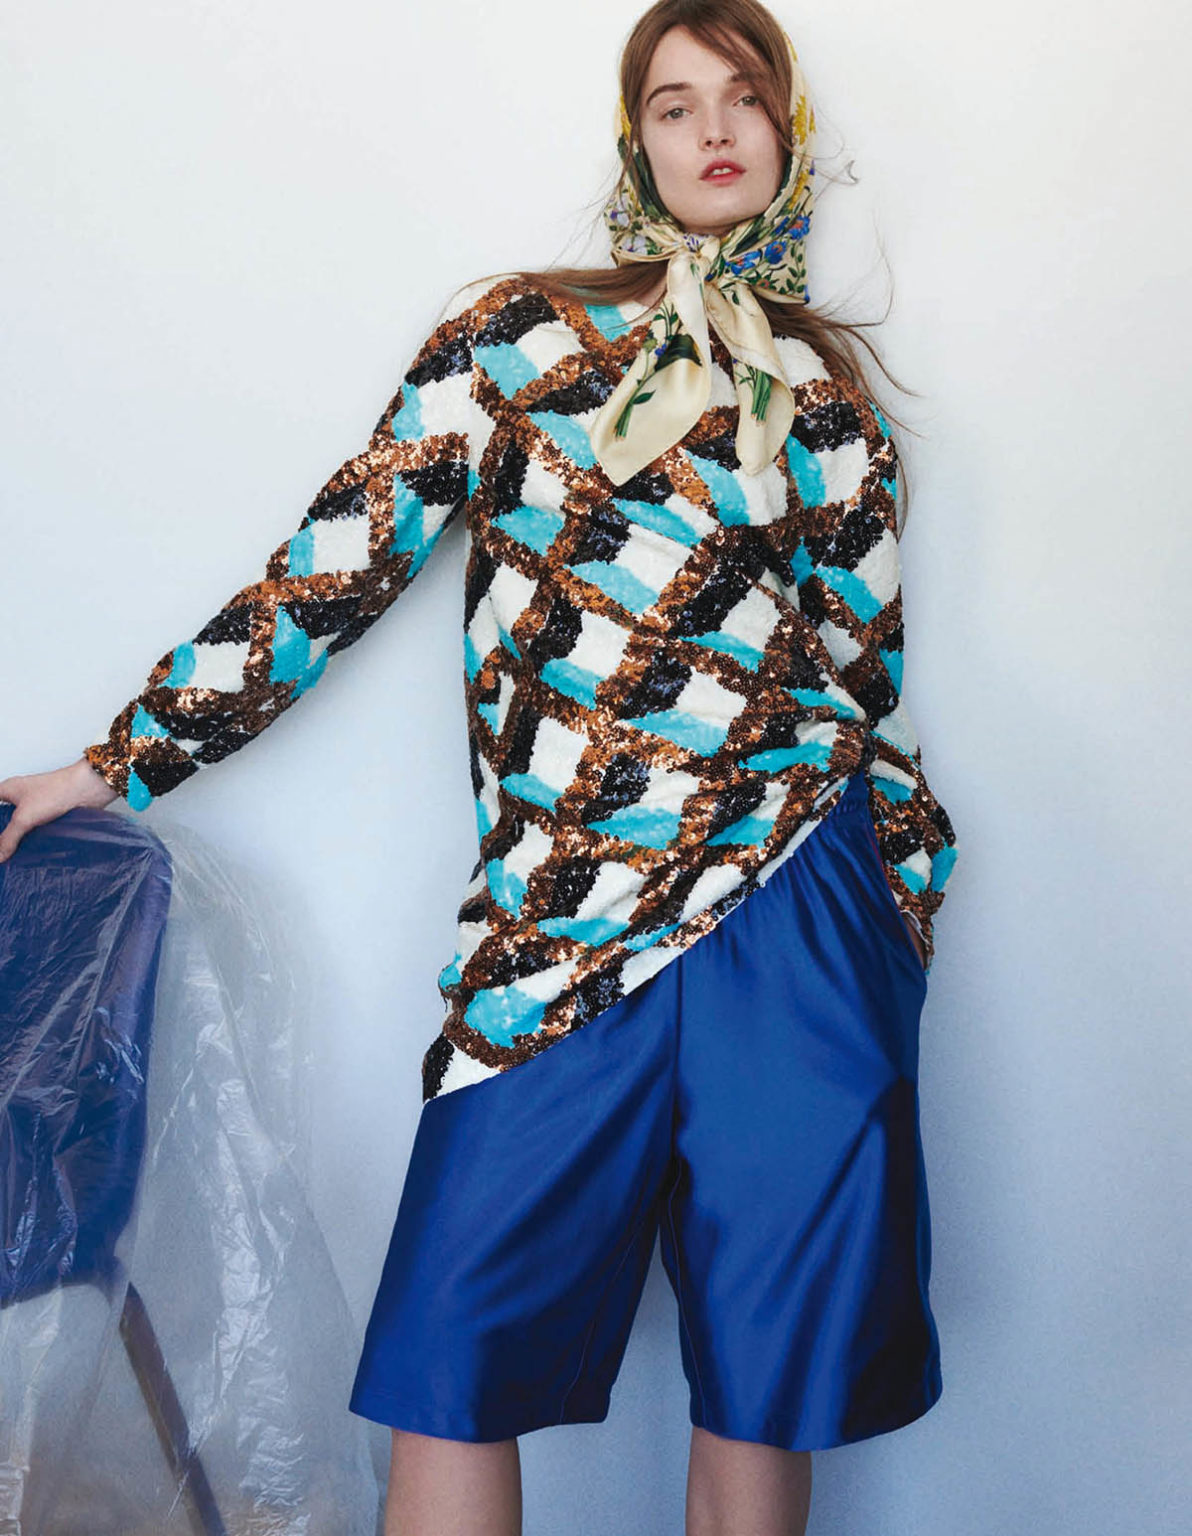 Lulu Tenney by Thomas Slack for Vogue China April 2021 - fashionotography